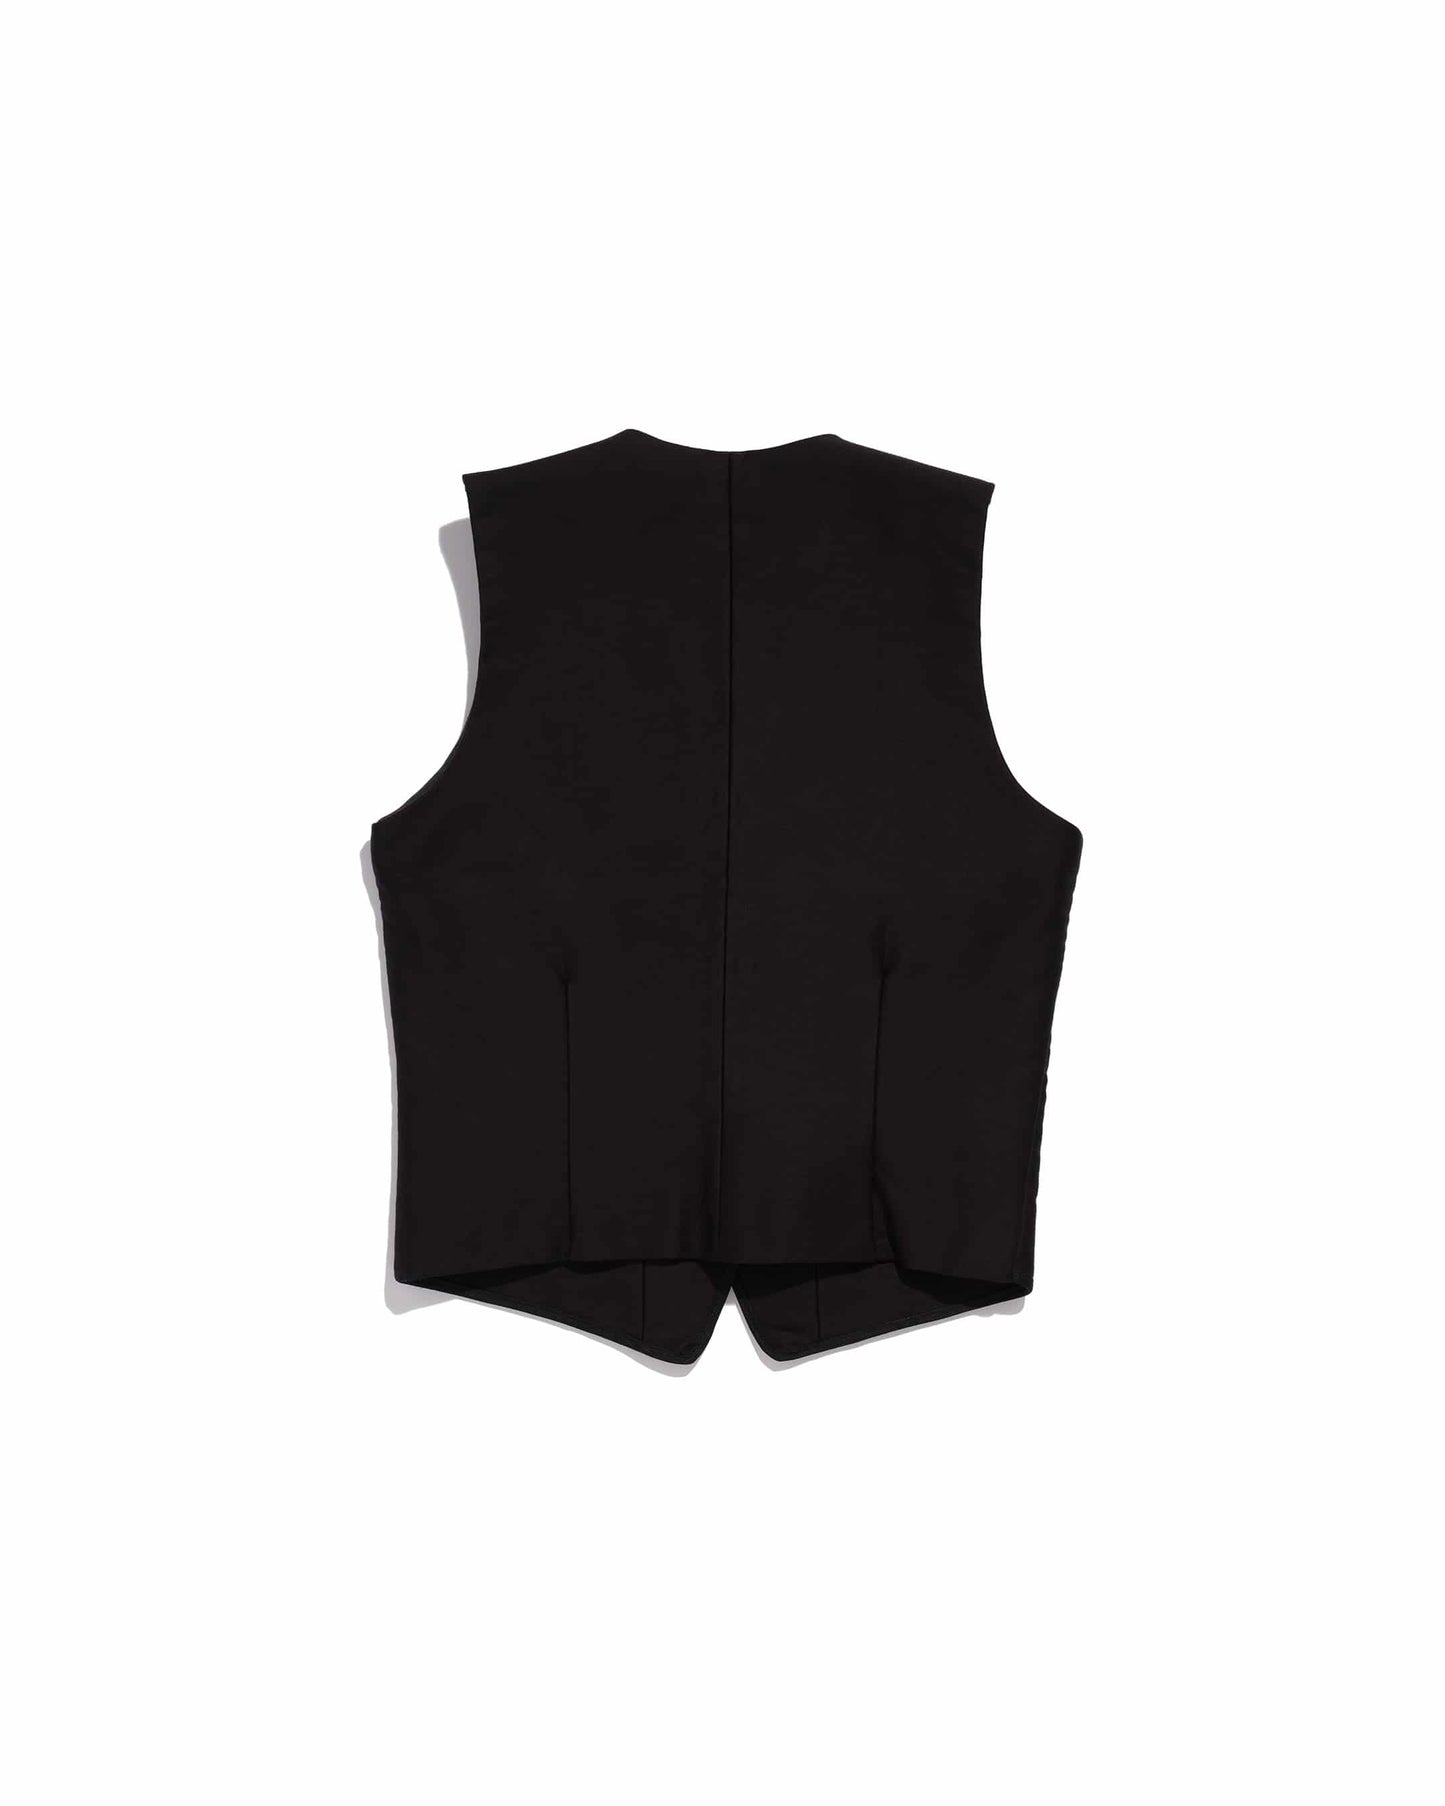 Gardian women's black moleskin vest